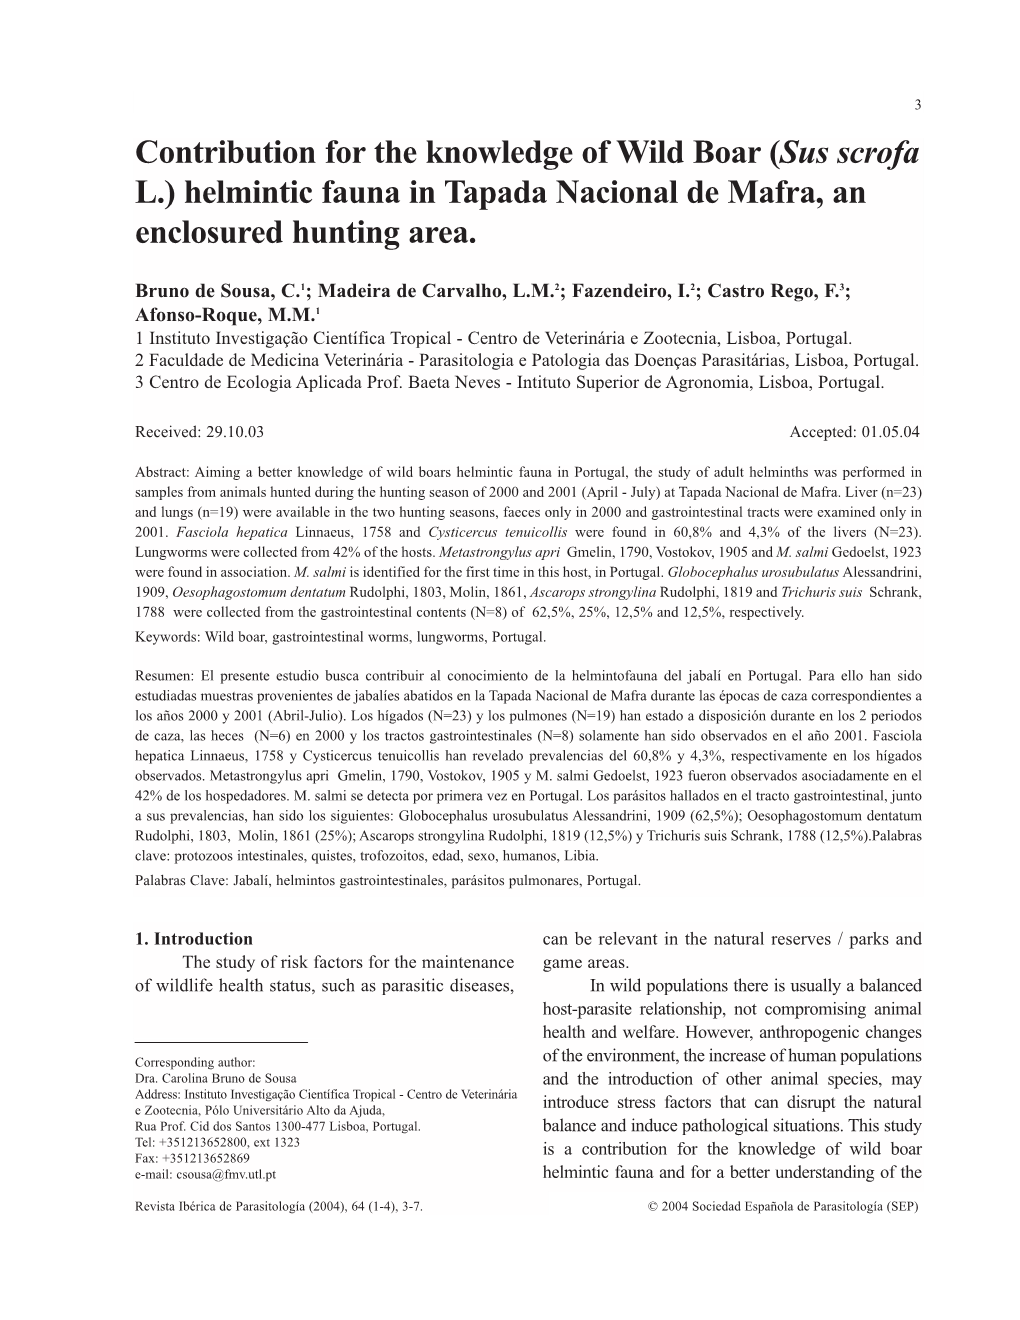 Contribution for the Knowledge of Wild Boar (Sus Scrofa L.) Helmintic Fauna in Tapada Nacional De Mafra, an Enclosured Hunting Area